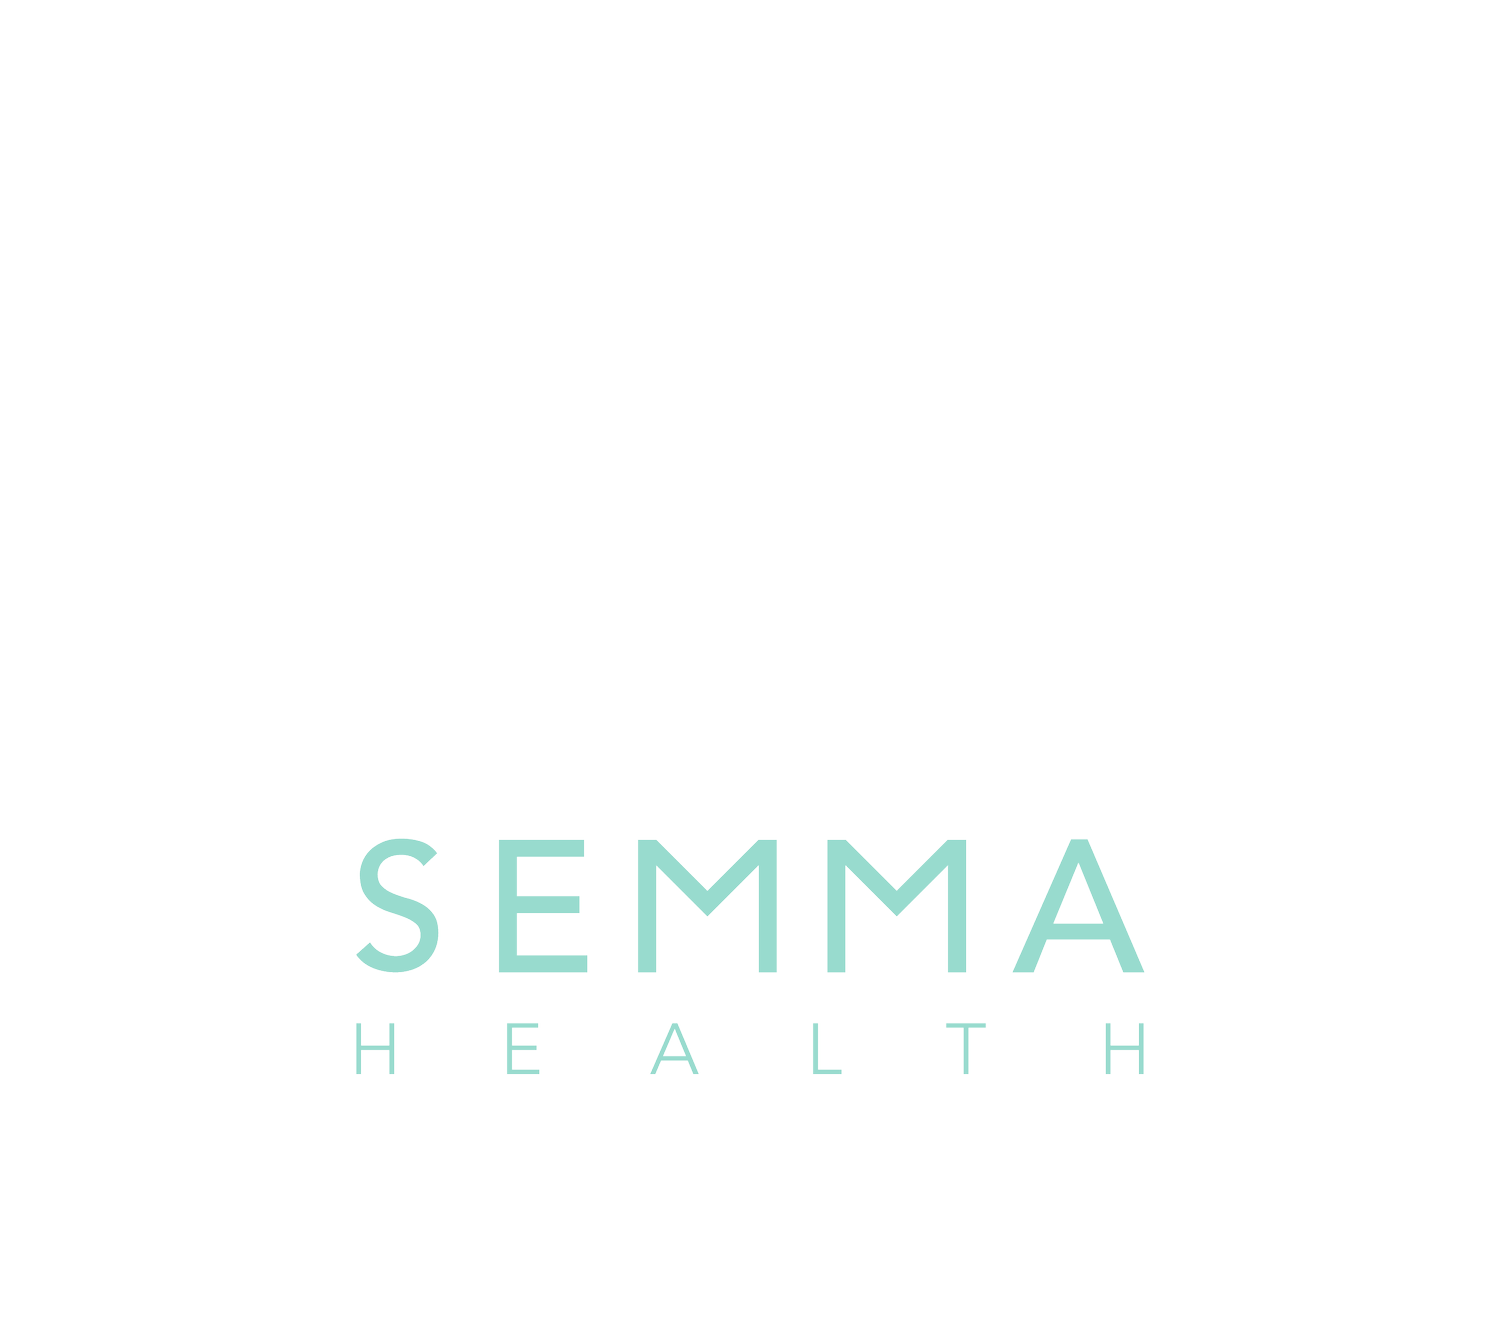 SEMMA HEALTH